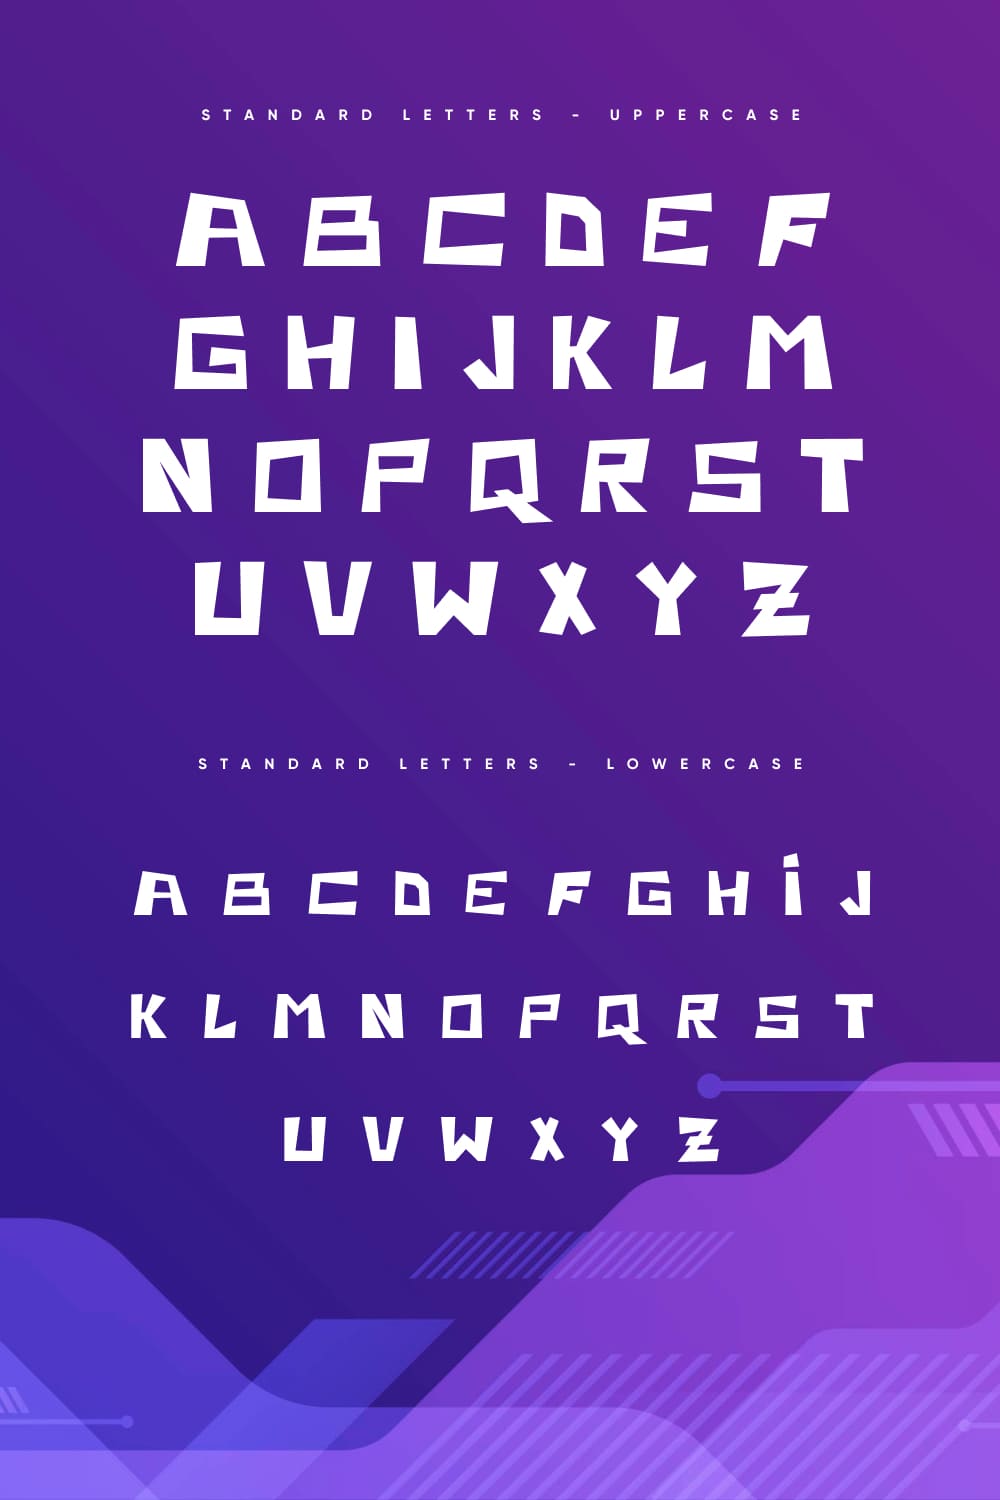 Retro Gaming Free Font Standart Letters Pinterest Preview by MasterBundles.